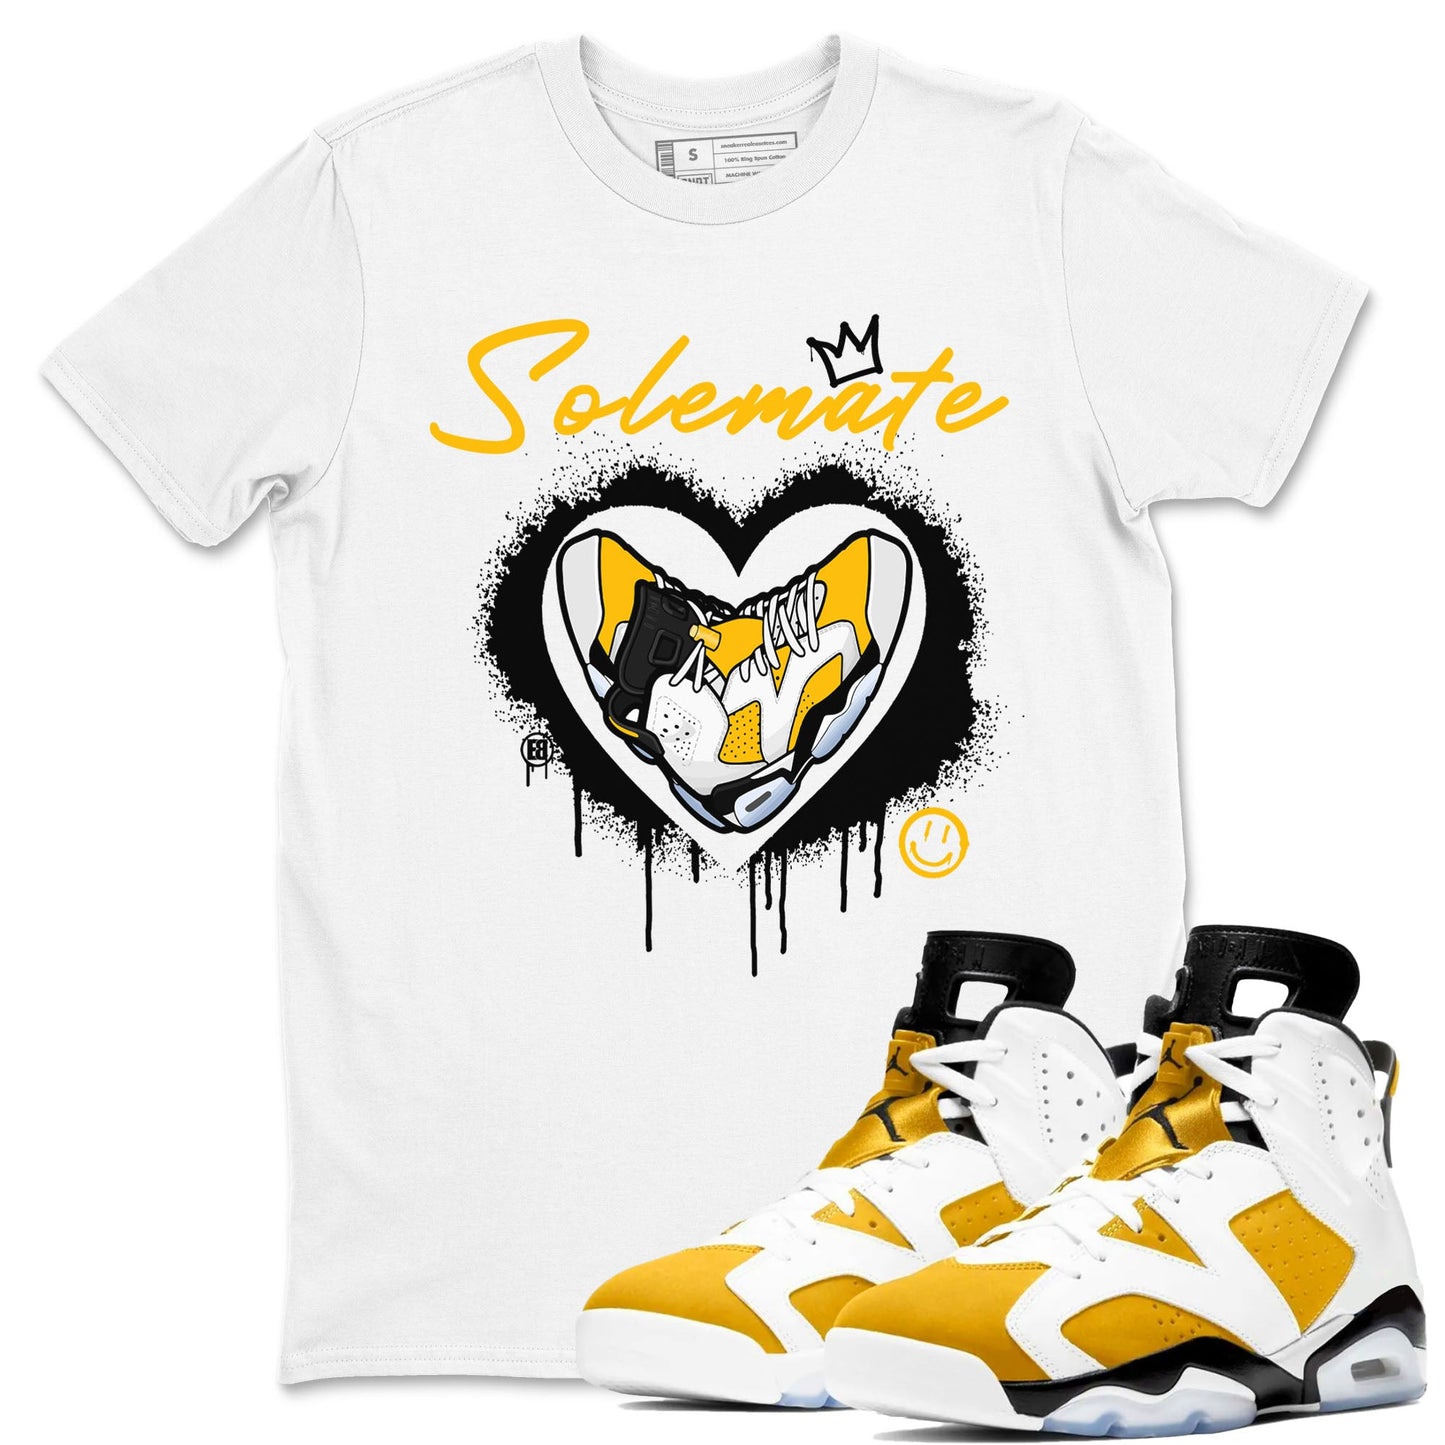 Solemate sneaker match tees to 6s Yellow Ochre street fashion brand for shirts to match Jordans Drip Gear Zone Air Jordan 6 Yellow Ochre unisex t-shirt White 1 unisex shirt